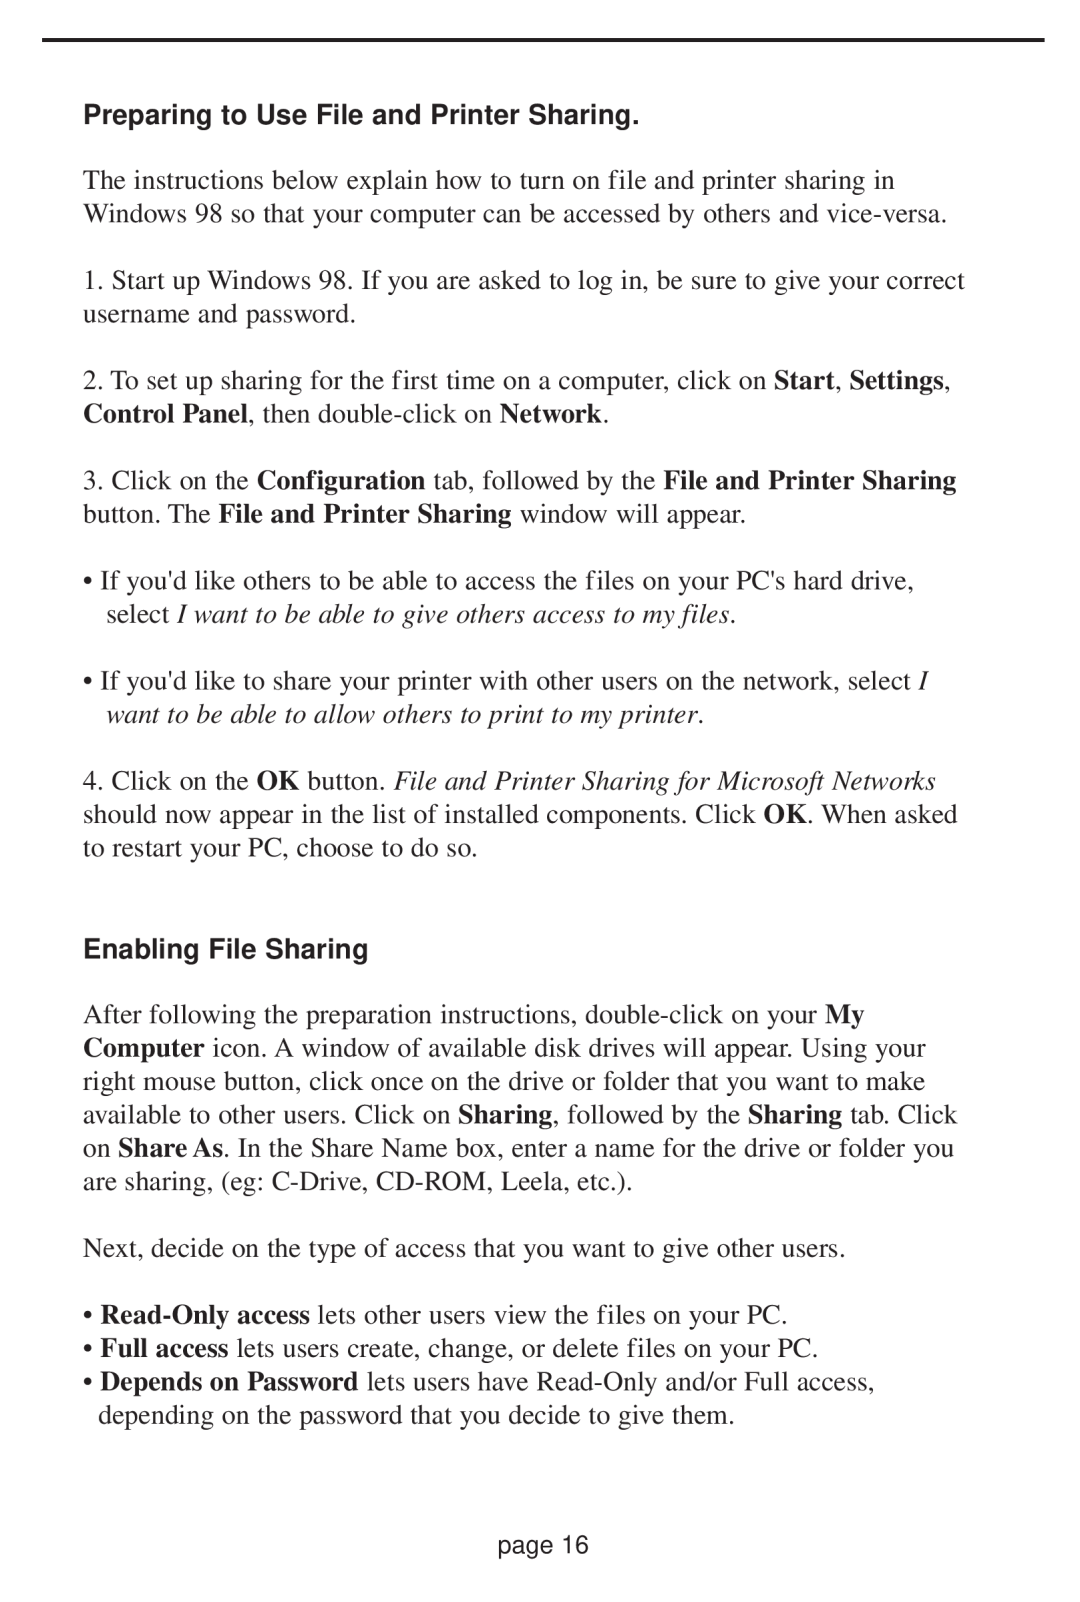 Linksys HPN100 manual Preparing to Use File and Printer Sharing, Enabling File Sharing 